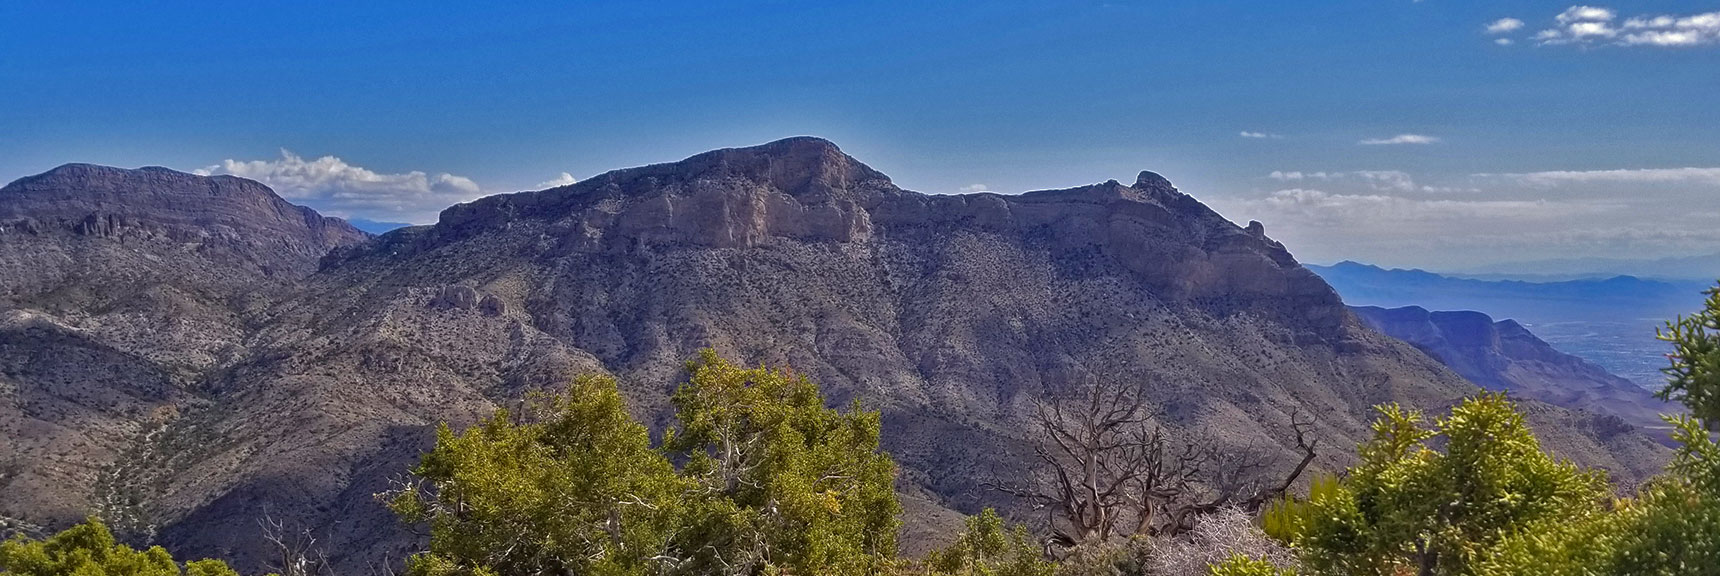 Damsel Peak Northern Approach | Brownstone Basin, Nevada